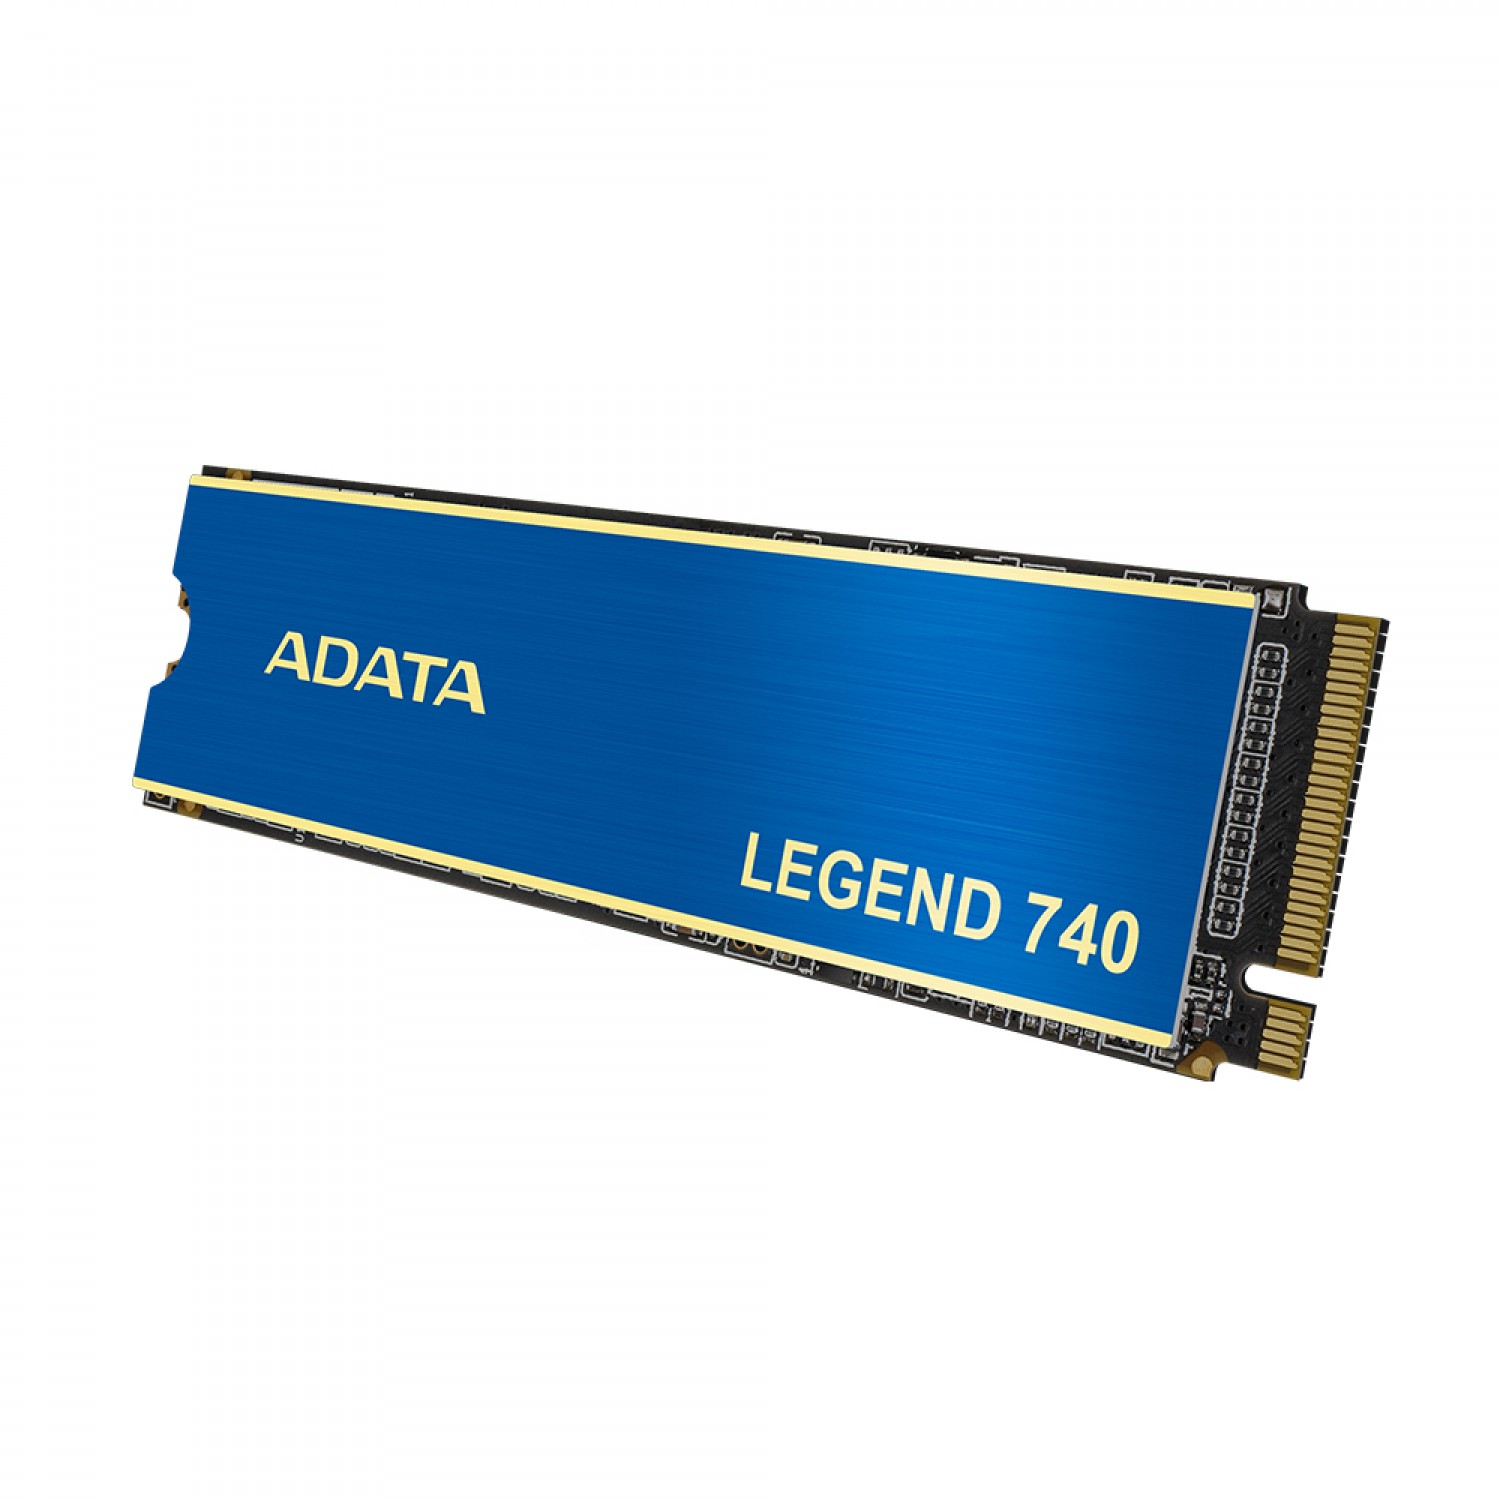 حافظه اس اس دی ADATA Legend 740 500GB-2